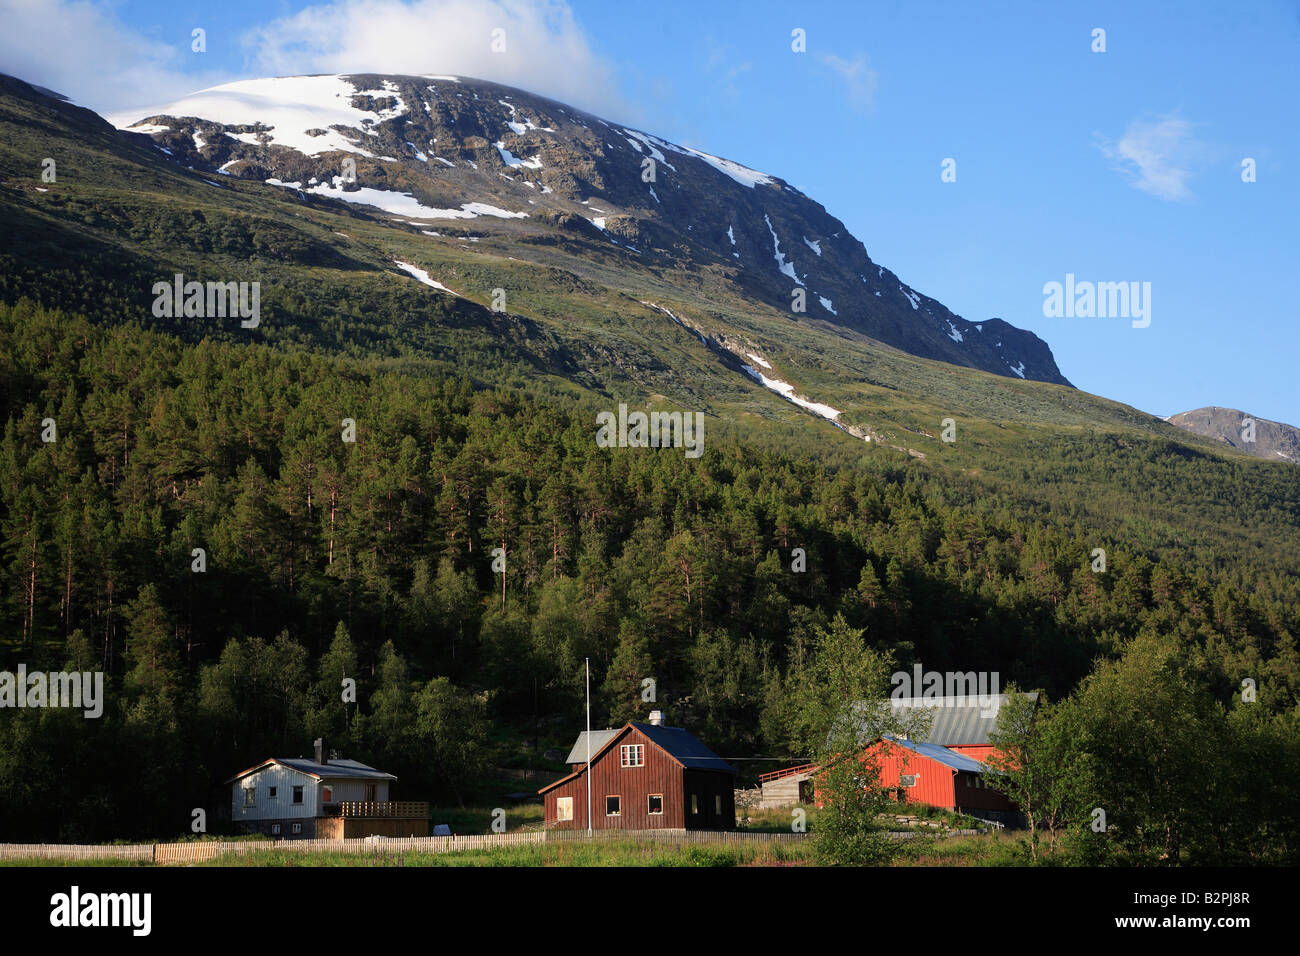 Norway Jotunheimen National Park mountain landscape scenery Stock Photo